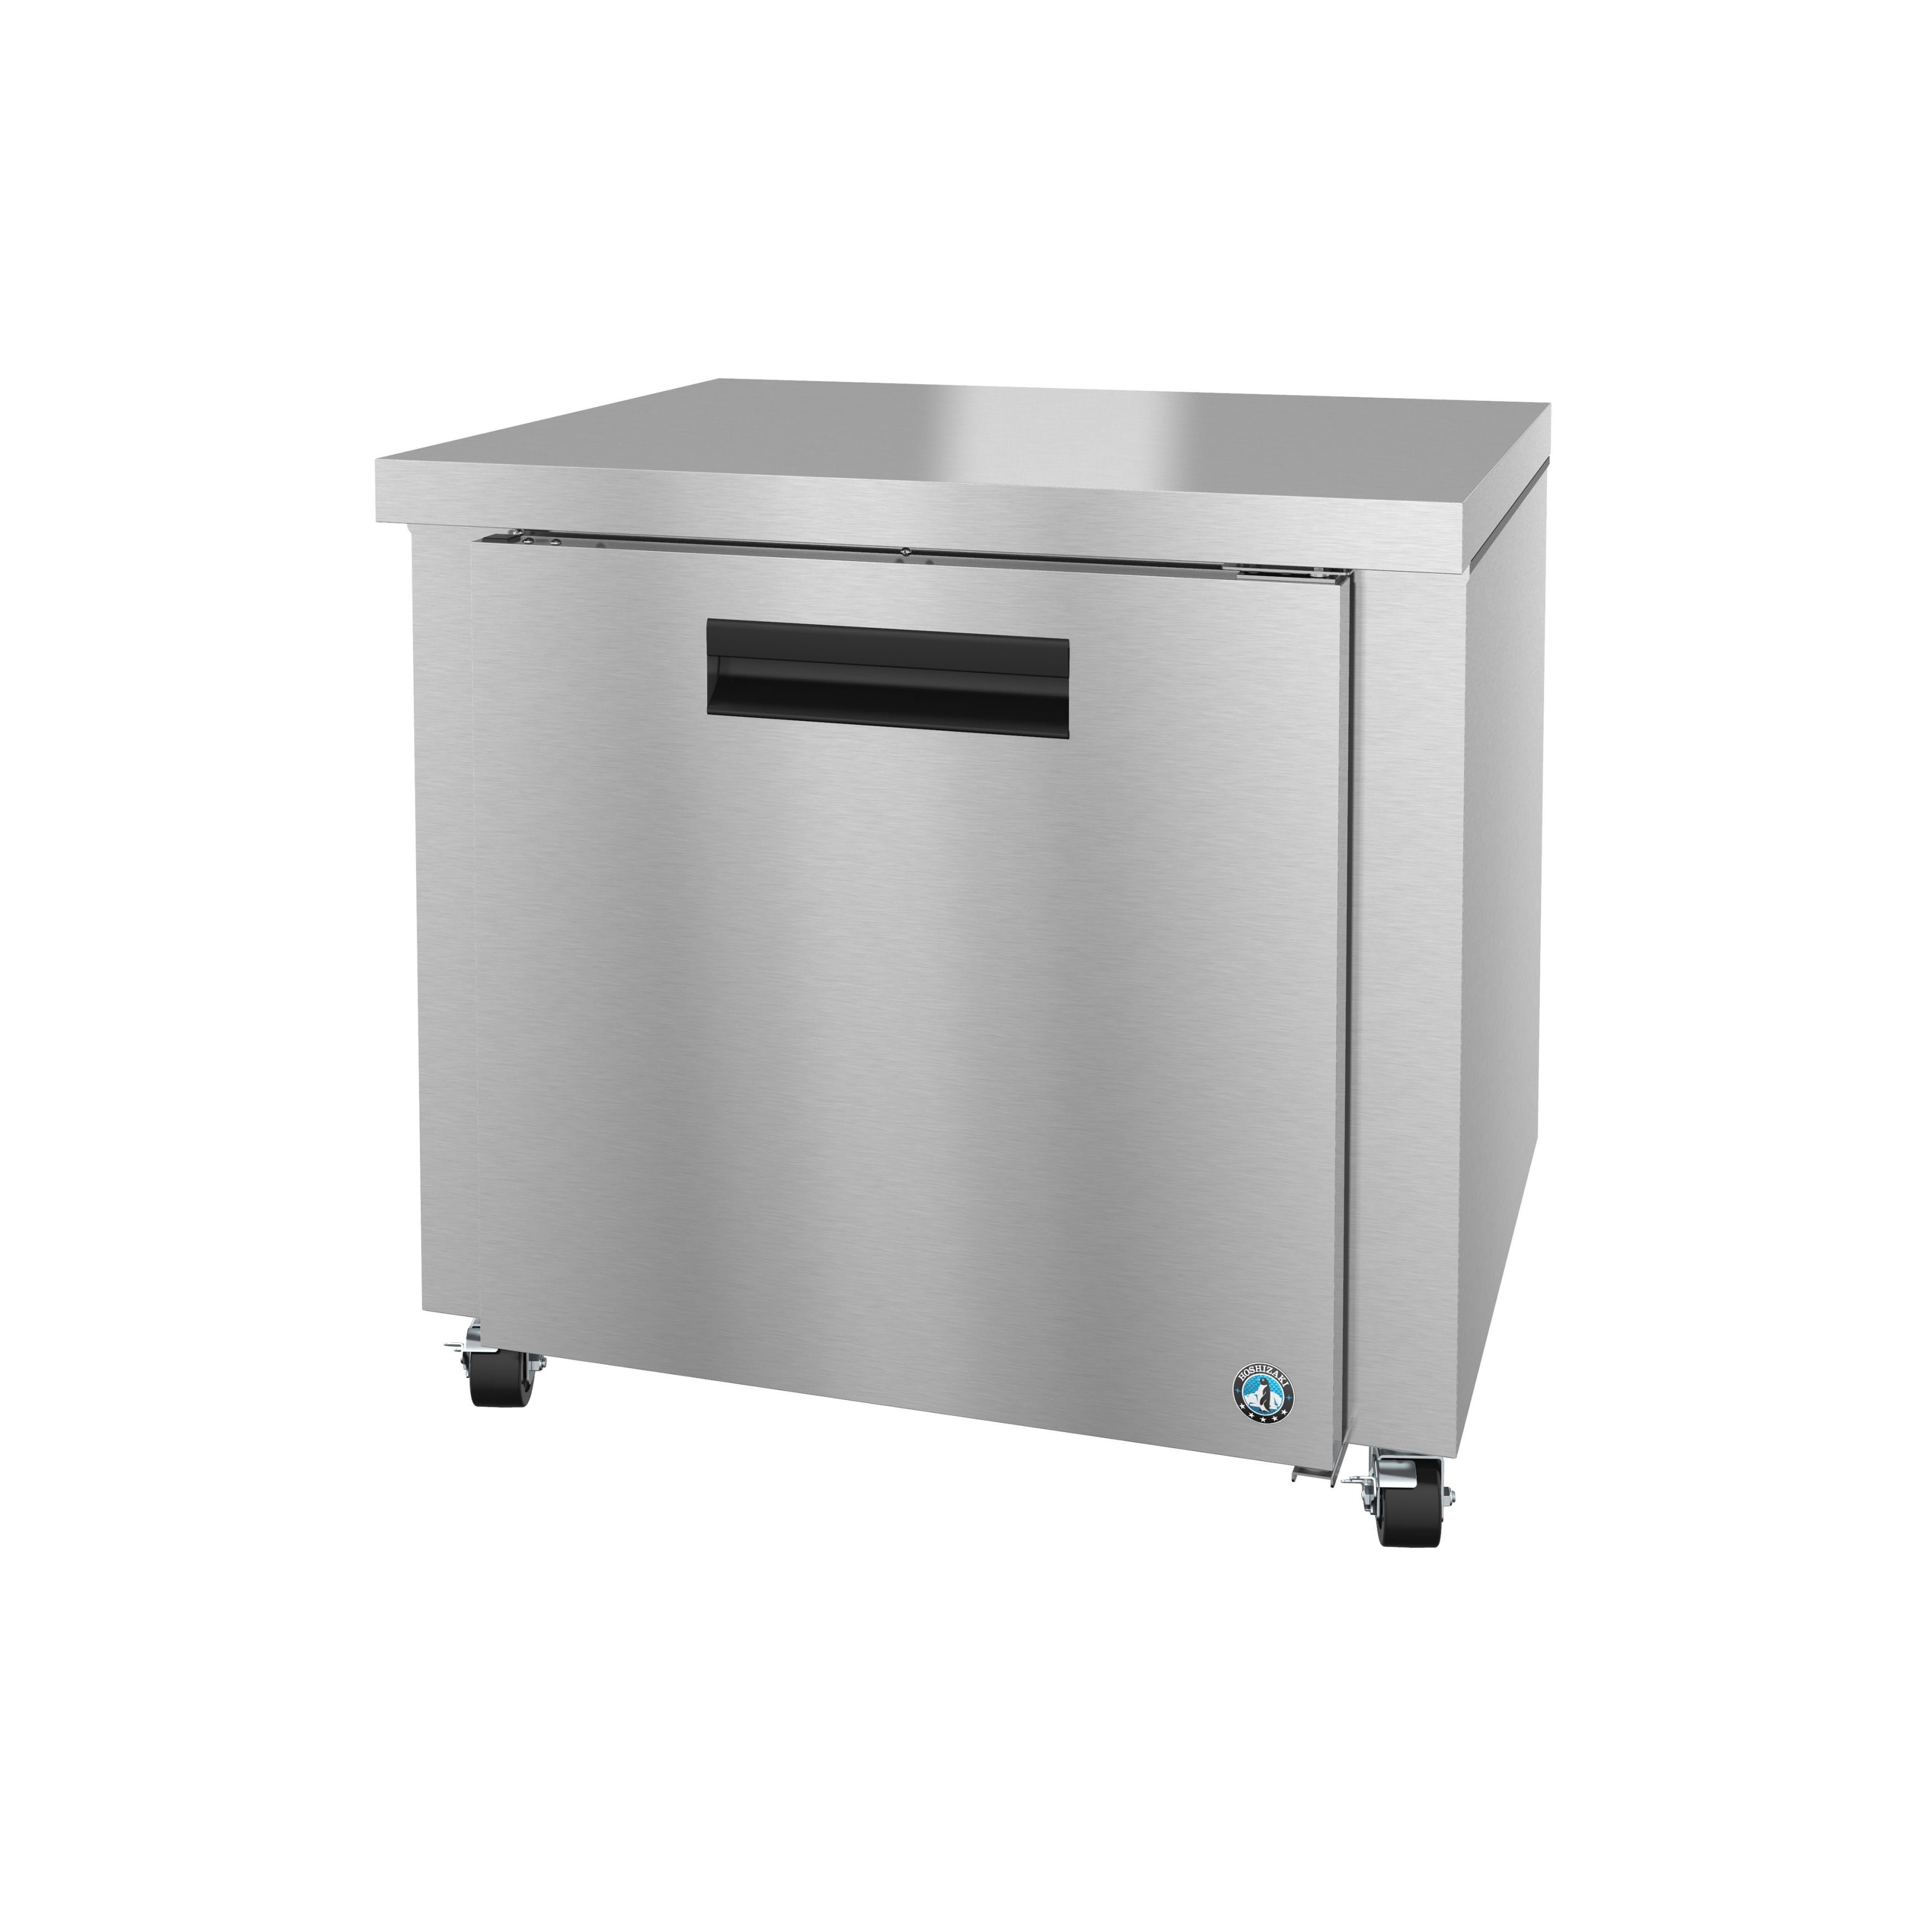 Hoshizaki - UR36B, Commercial 36" Steelheart B Series Undercounter Refrigerator 8.64 cu. ft.